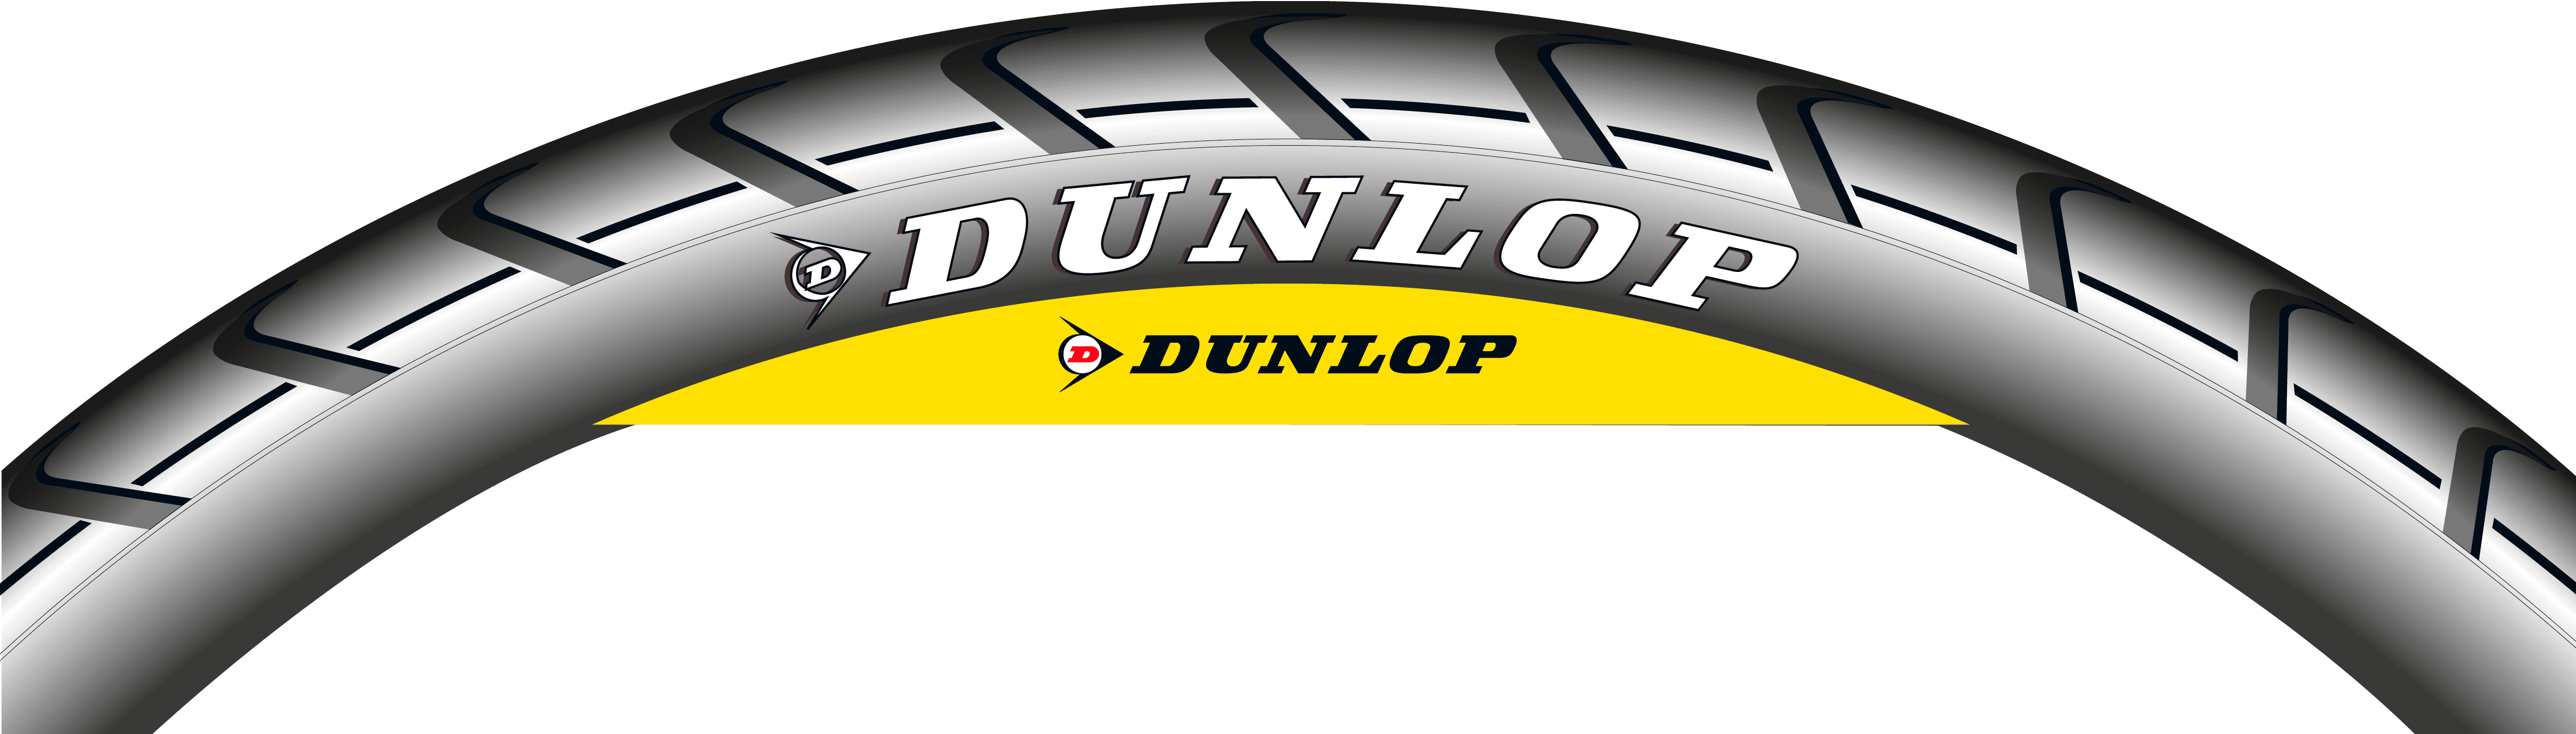 TK Production, Dunlop, Intervention